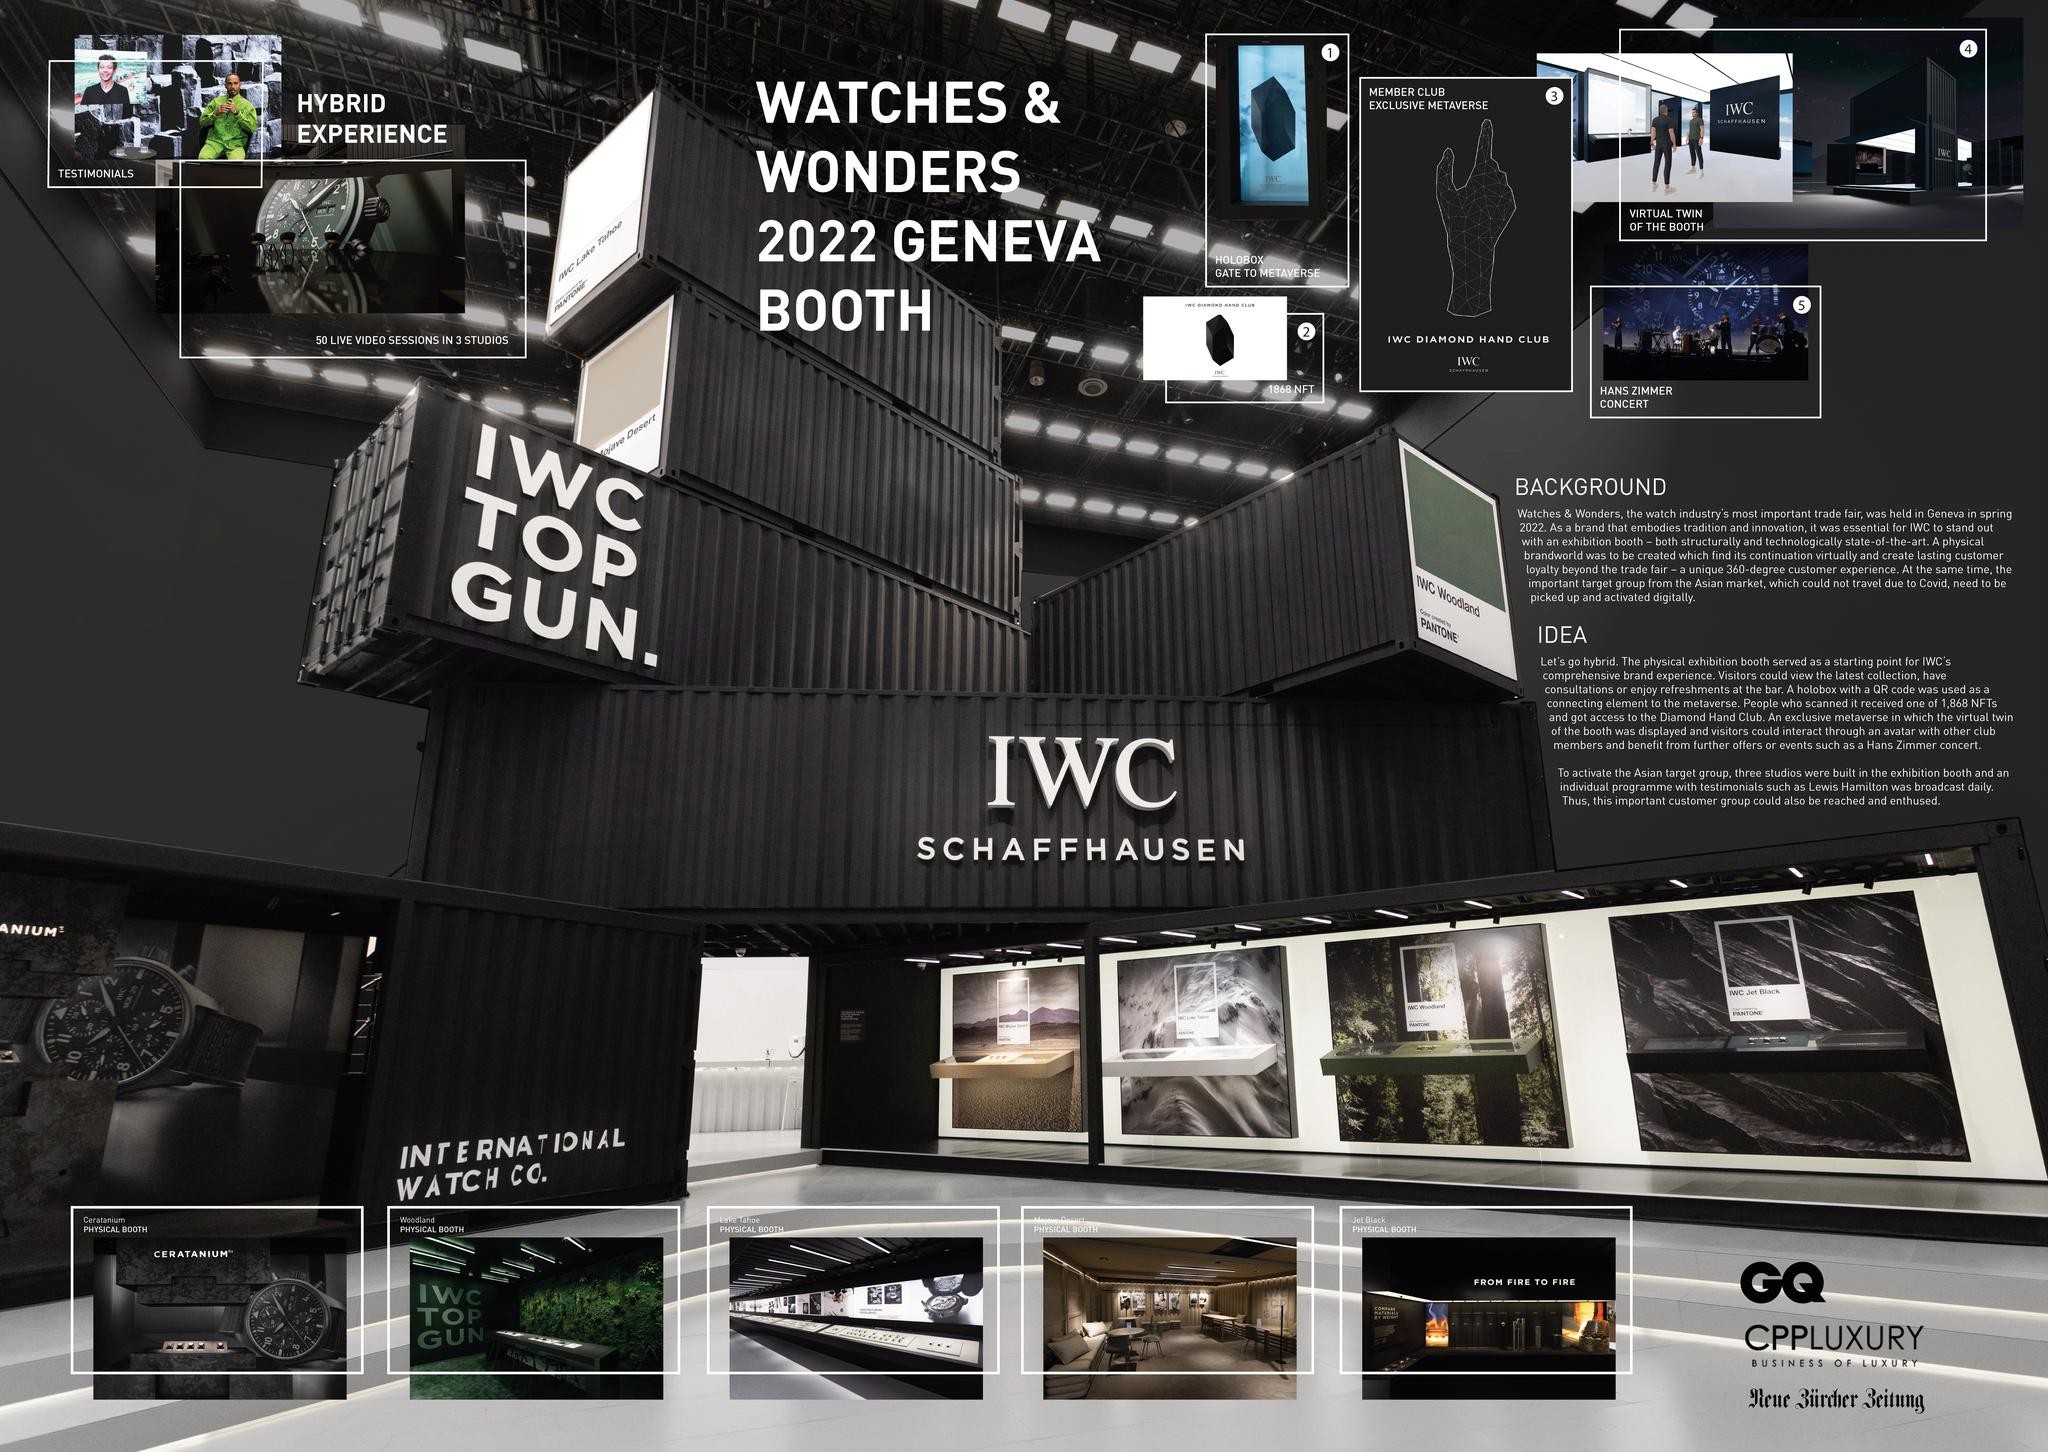 IWC Watches & Wonders 2022 Geneva Booth